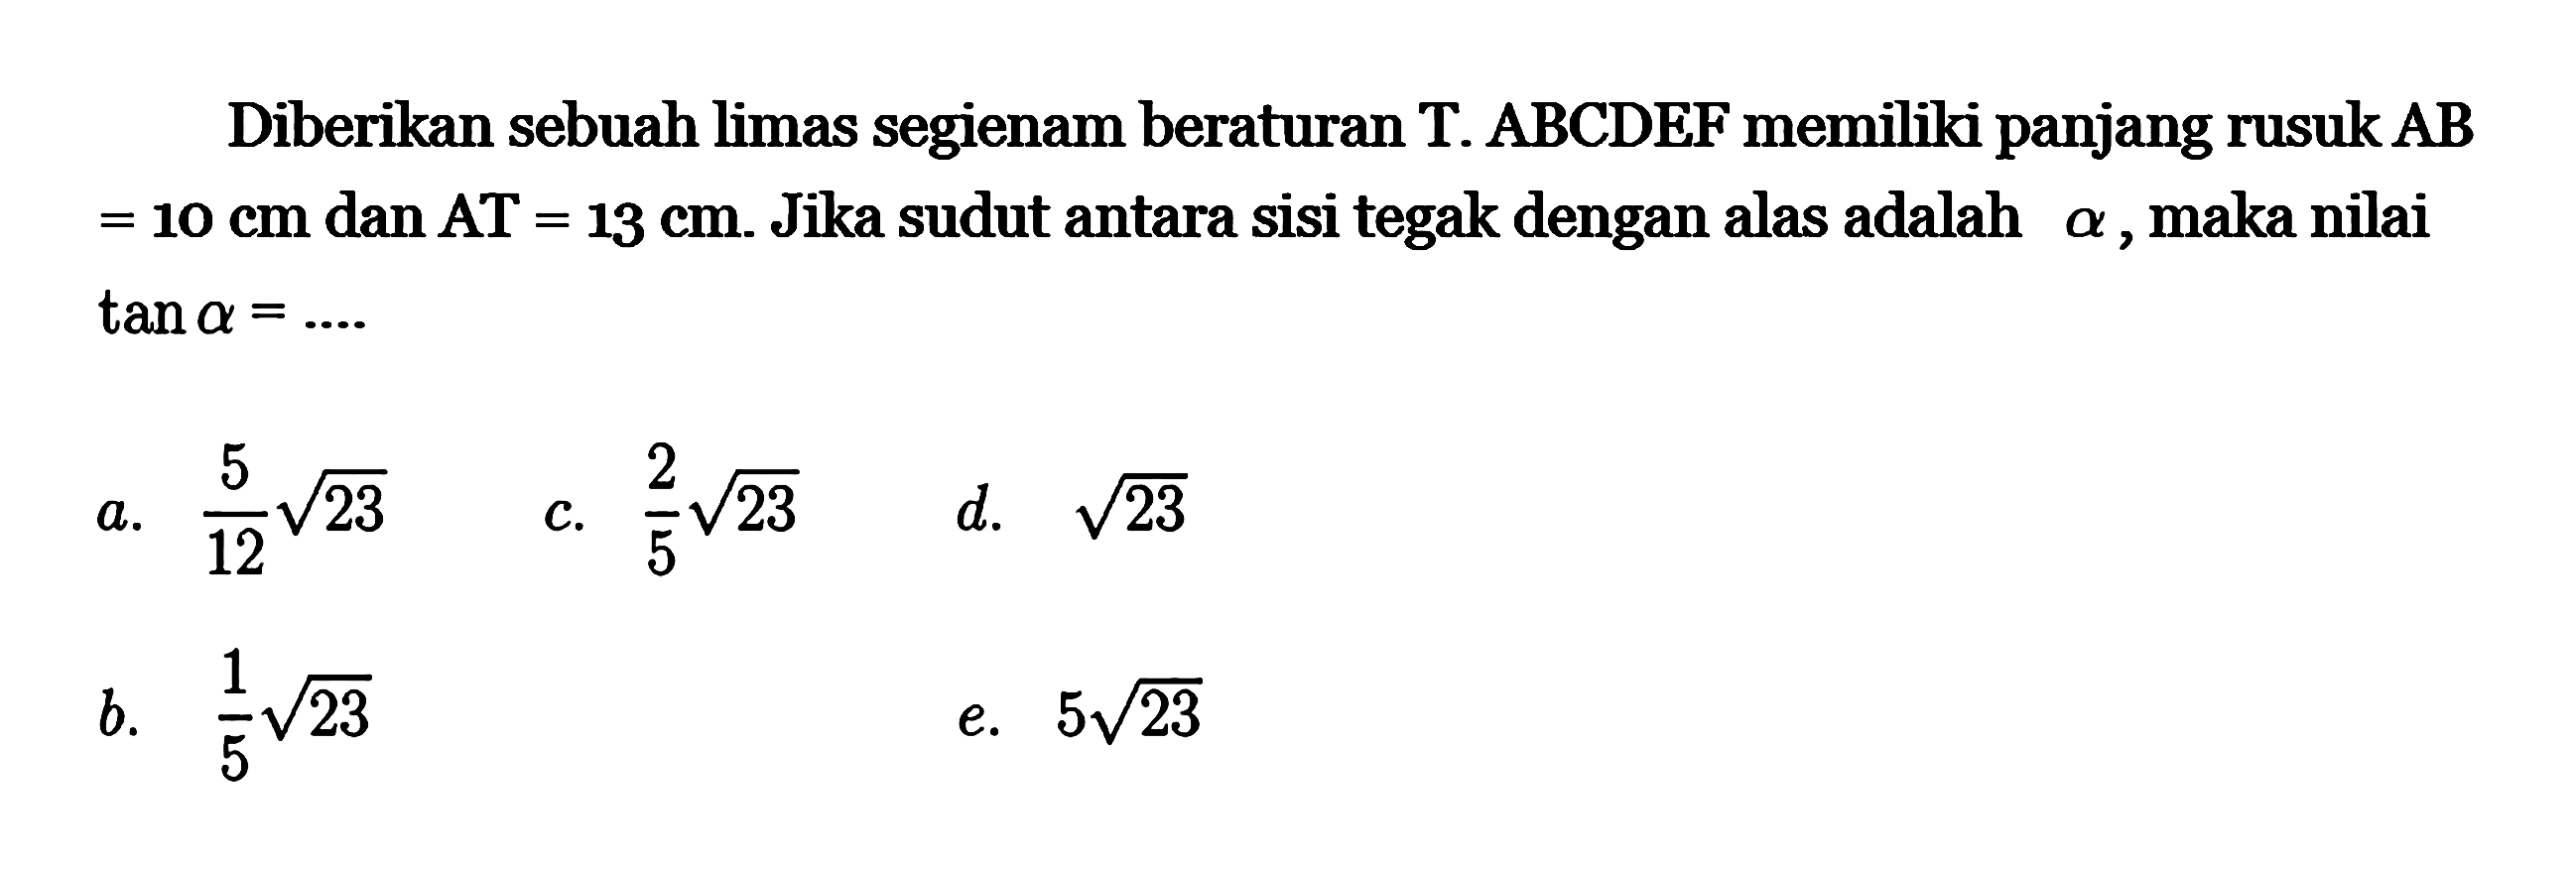 Diberikan sebuah limas segienam beraturan T. ABCDEF memiliki panjang rusuk AB=10 cm dan AT=13 cm. Jika sudut antara sisi tegak dengan alas adalah alpha, maka nilai tan alpha=....